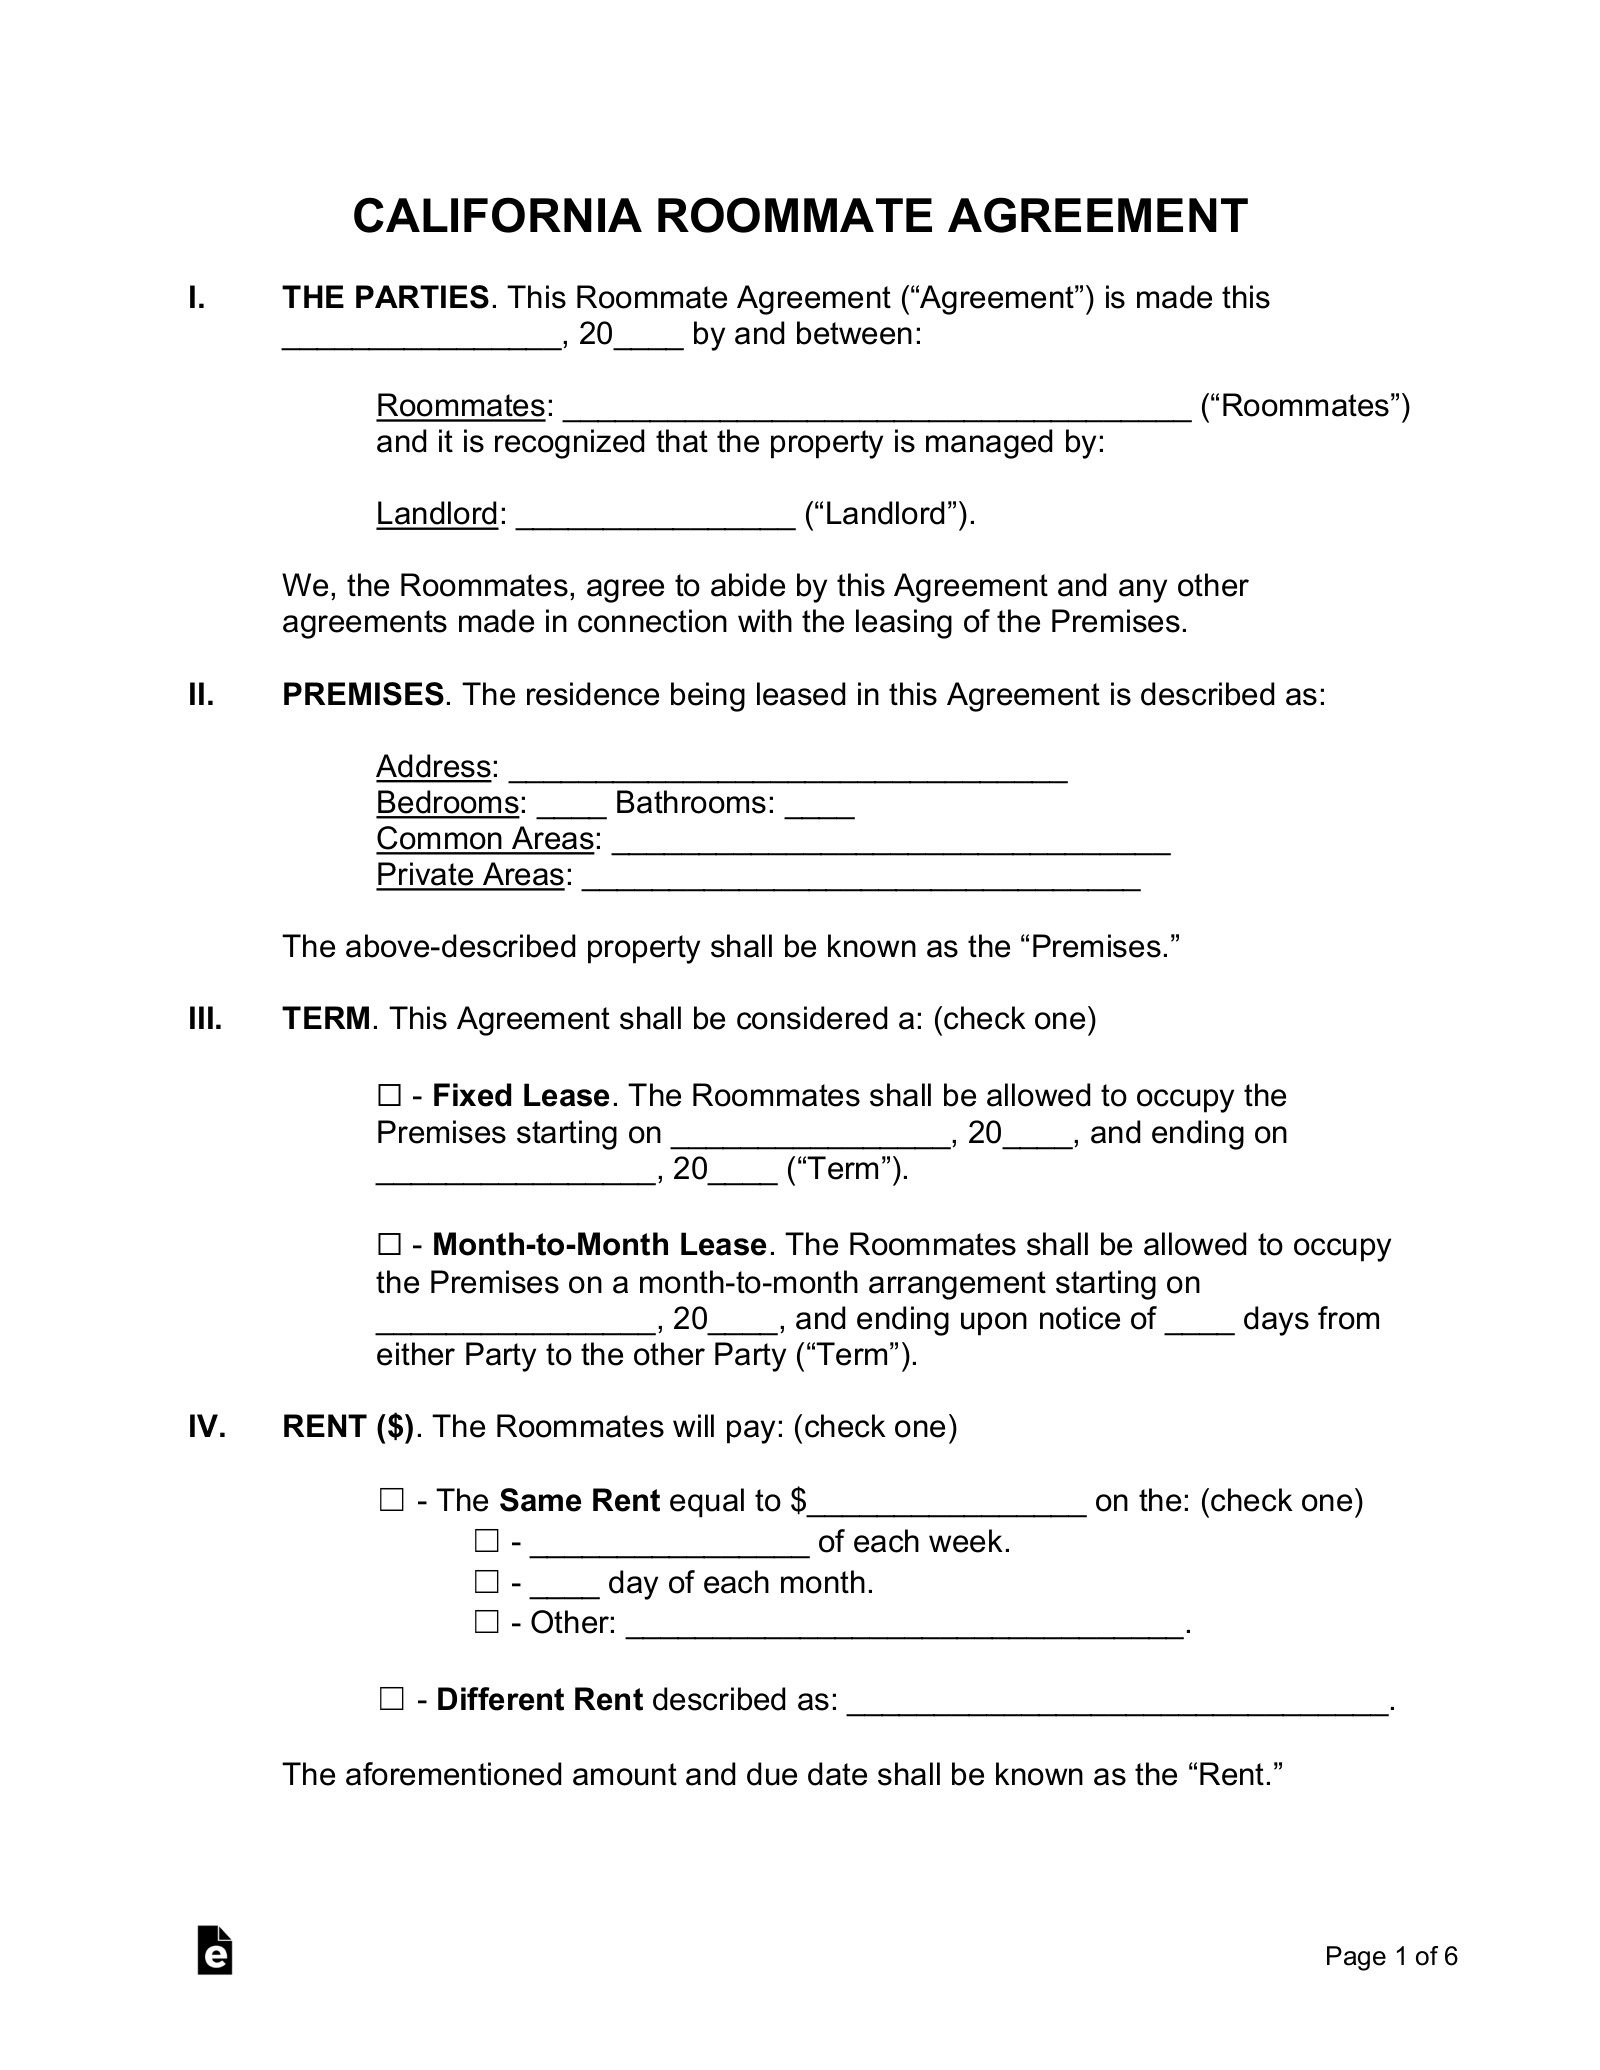 House Rental Agreement Letter Sample from eforms.com